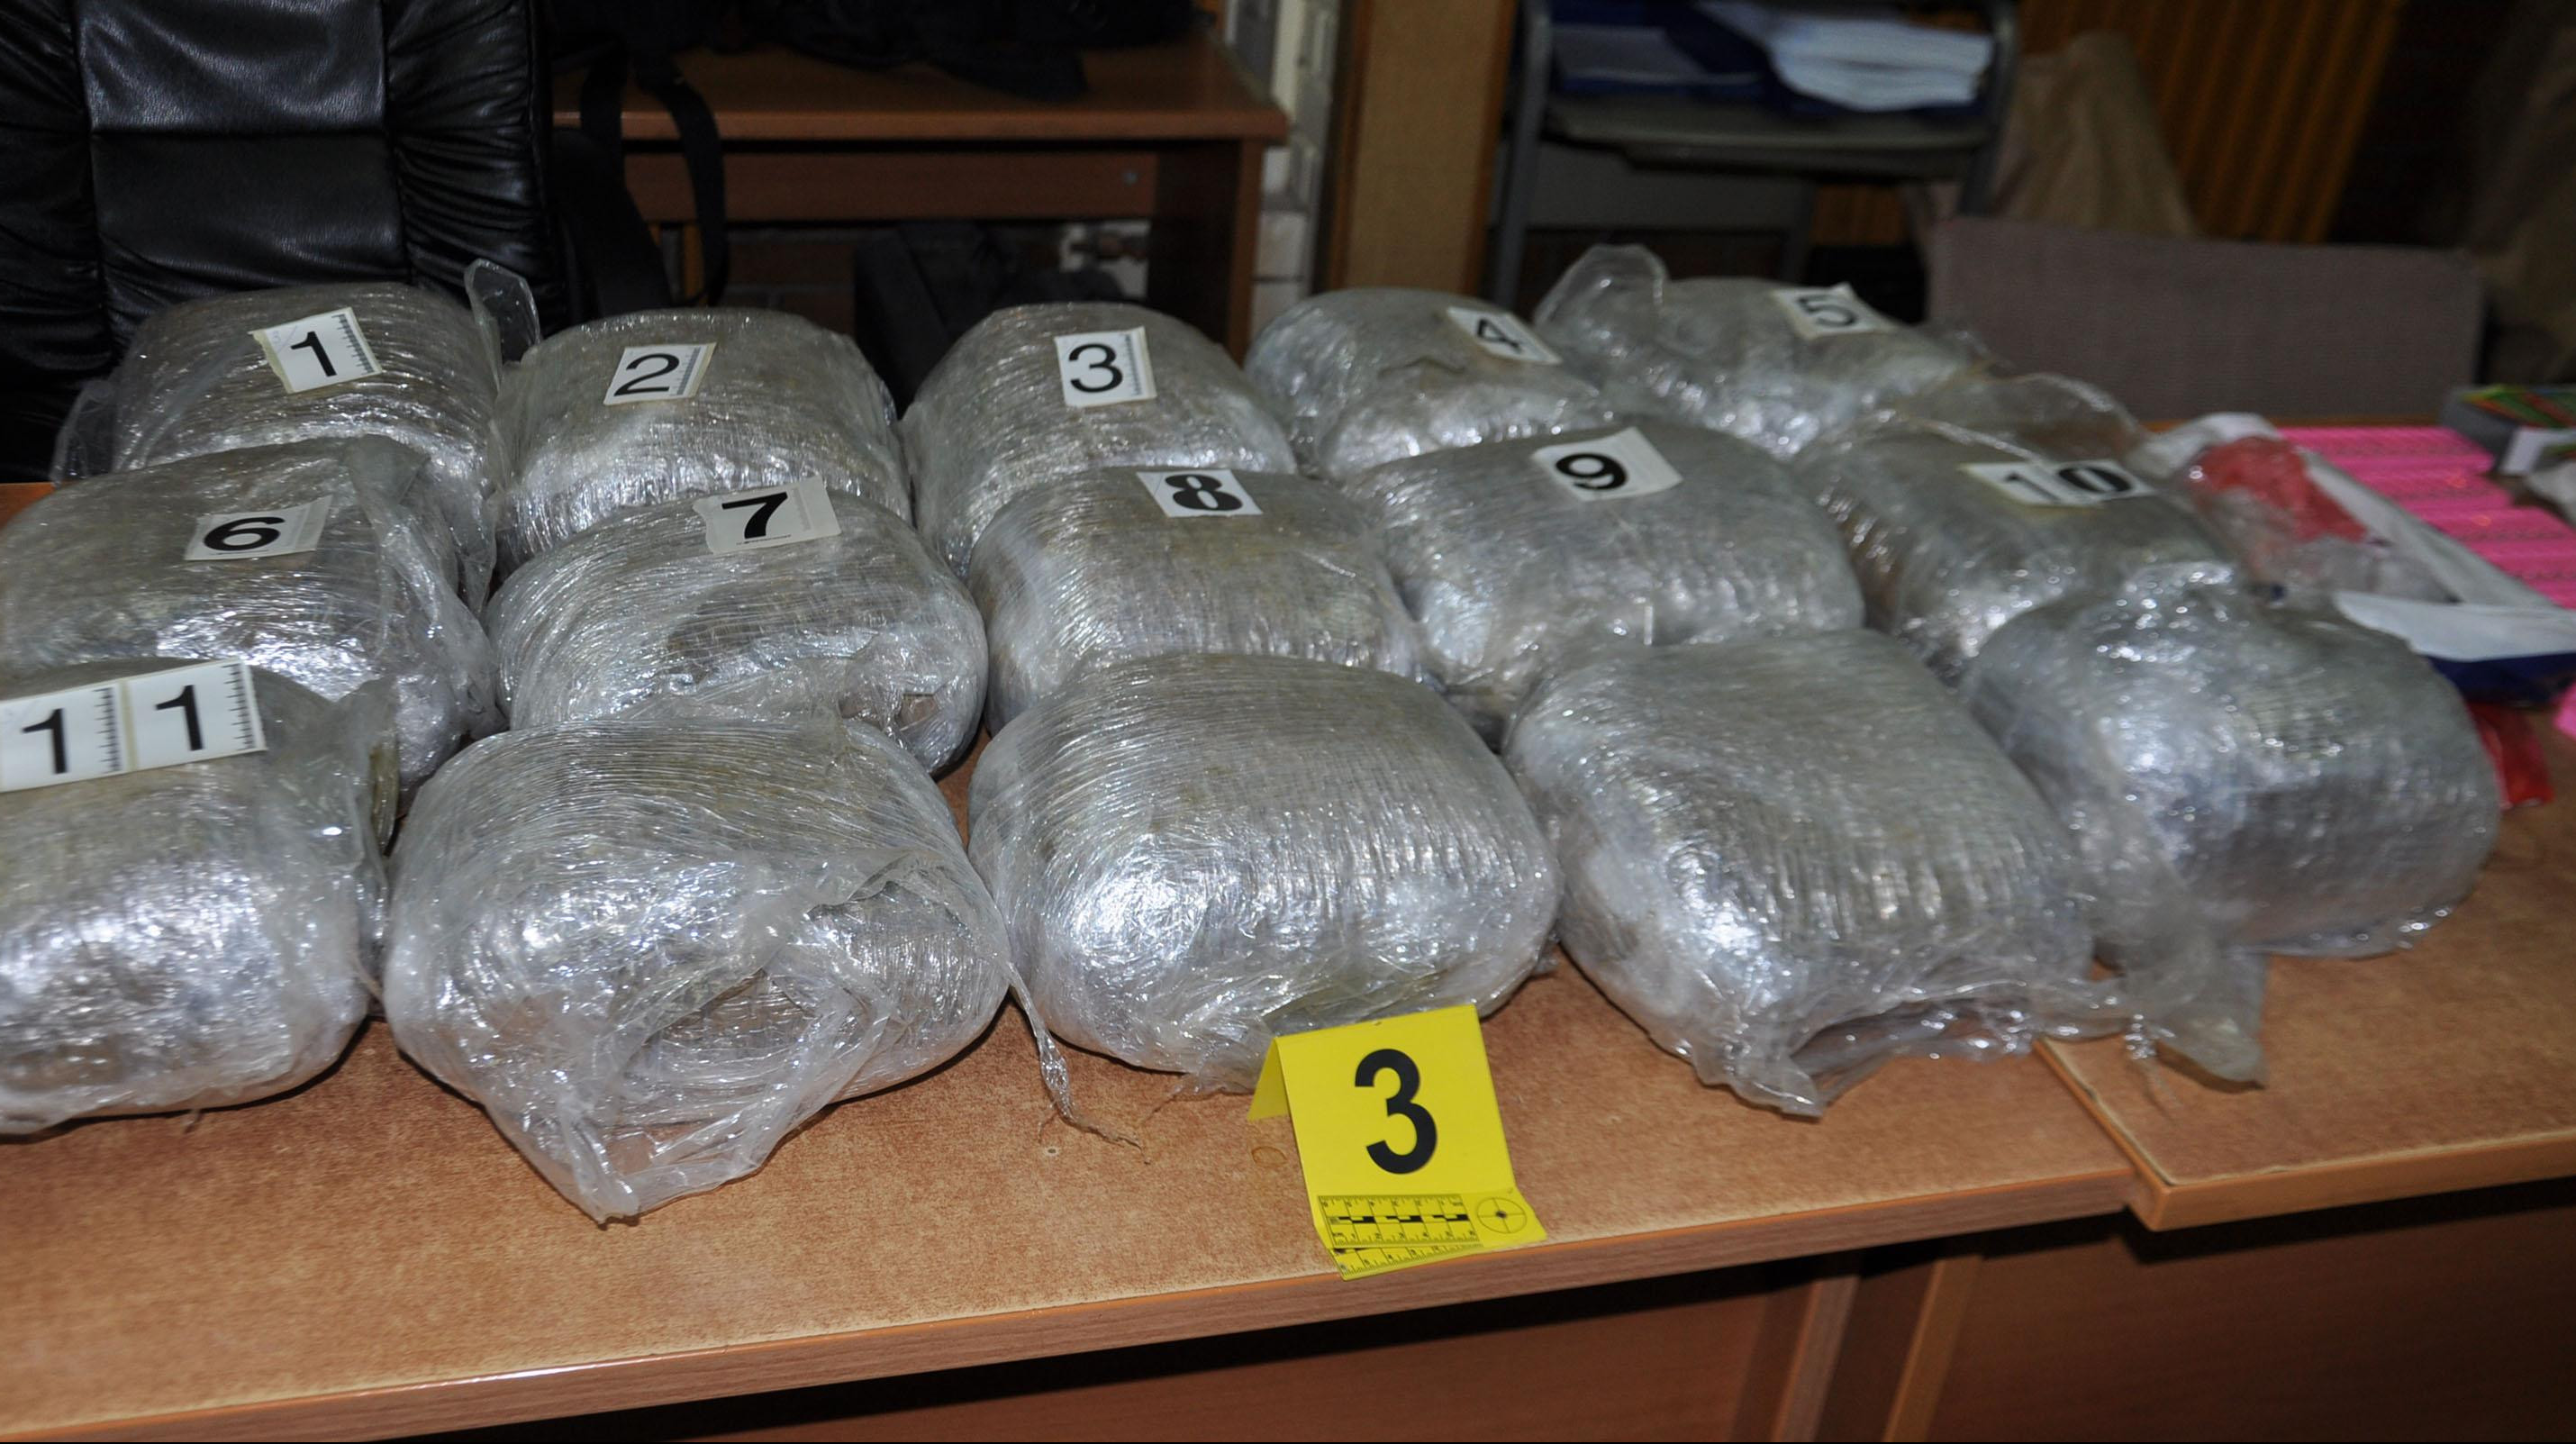 (FOTO) SPEKTAKULARNA AKCIJA POLICIJE! Zaplenjeno 20 kg narkotika,10 ručnih bombi, uhapšeno šestoro!